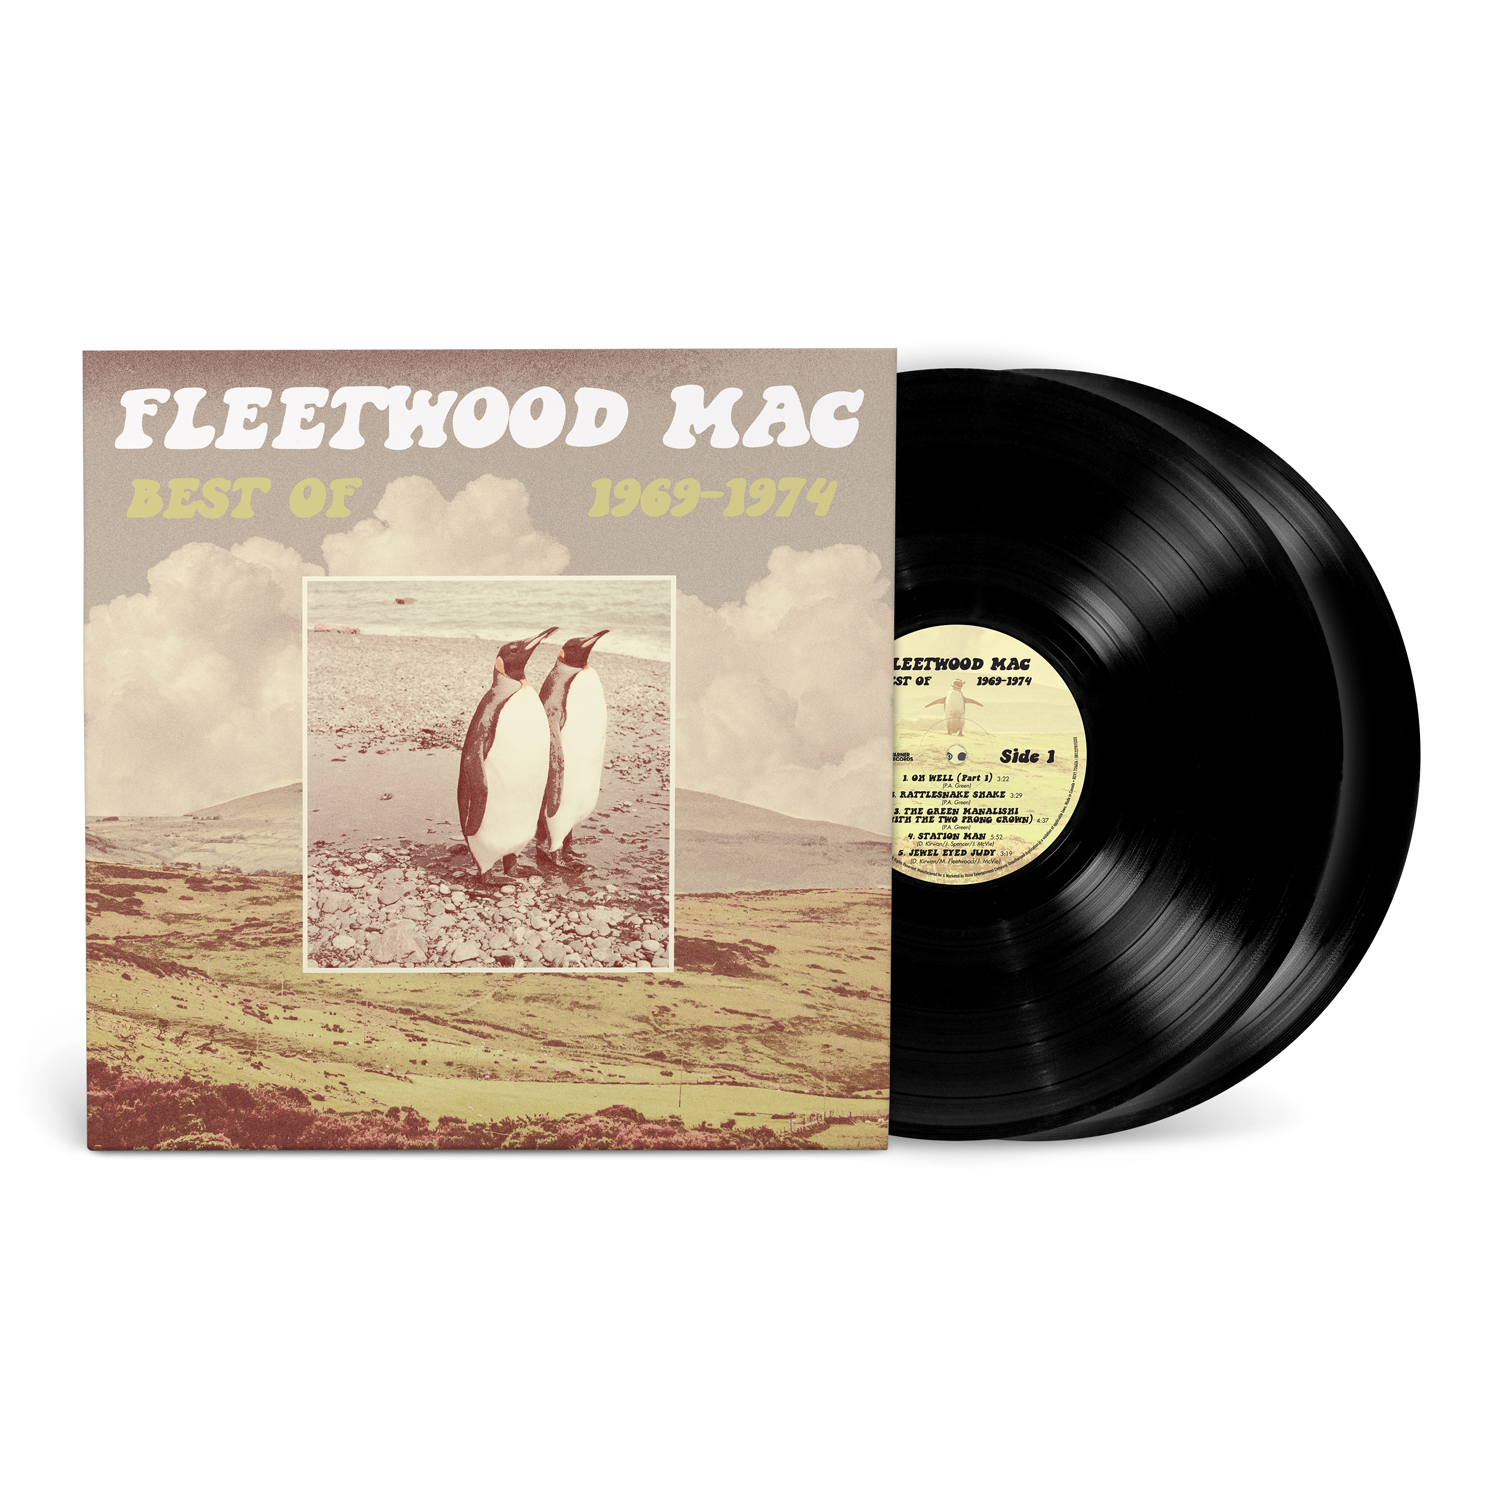 Buy Fleetwood Mac Vinyl and CDs | Dig! Store